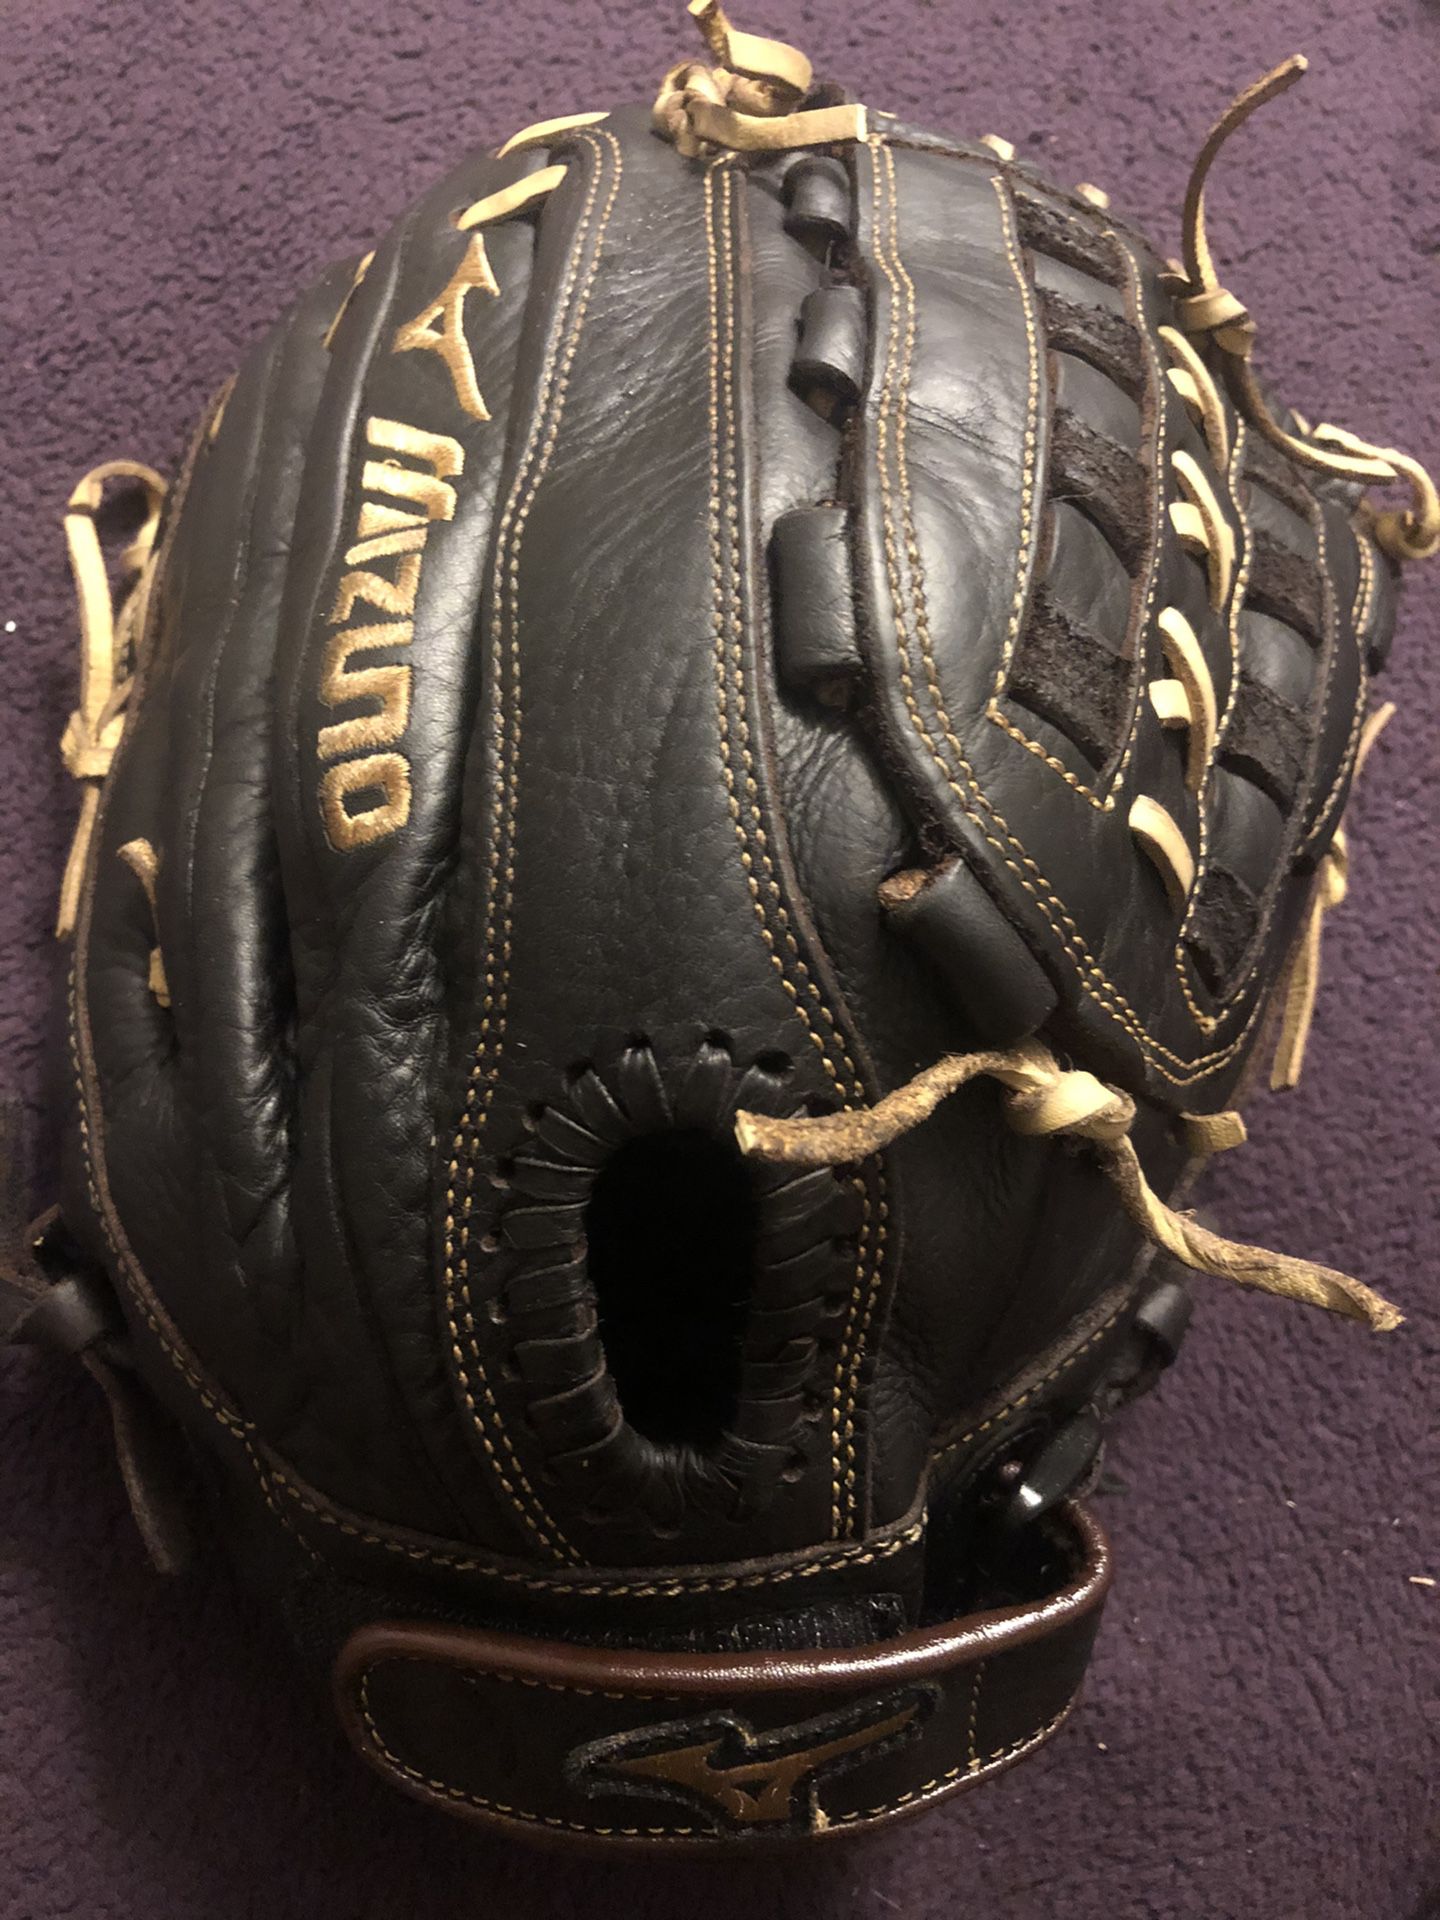 Mizuno Diamond Pro Softball Glove